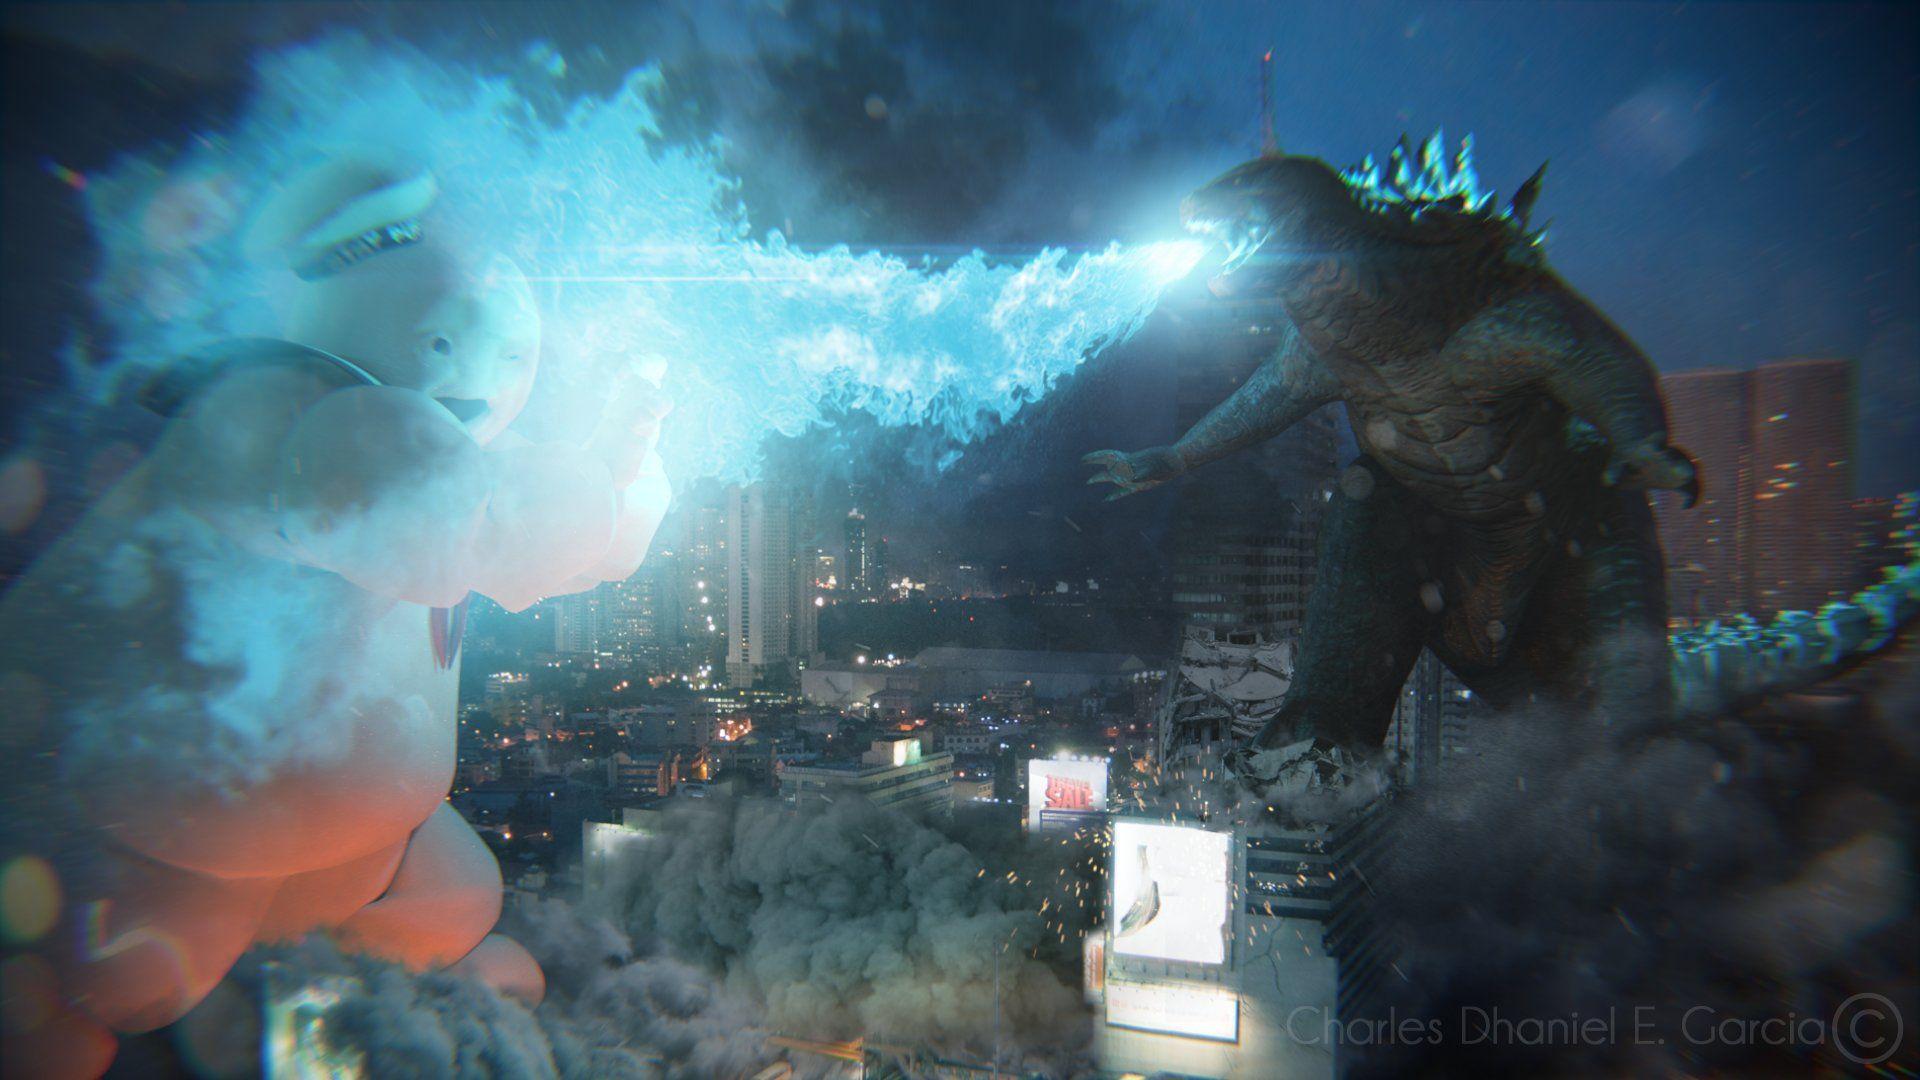 Godzilla vs Stay Puft Marshmallow Man, Charles Dhaniel